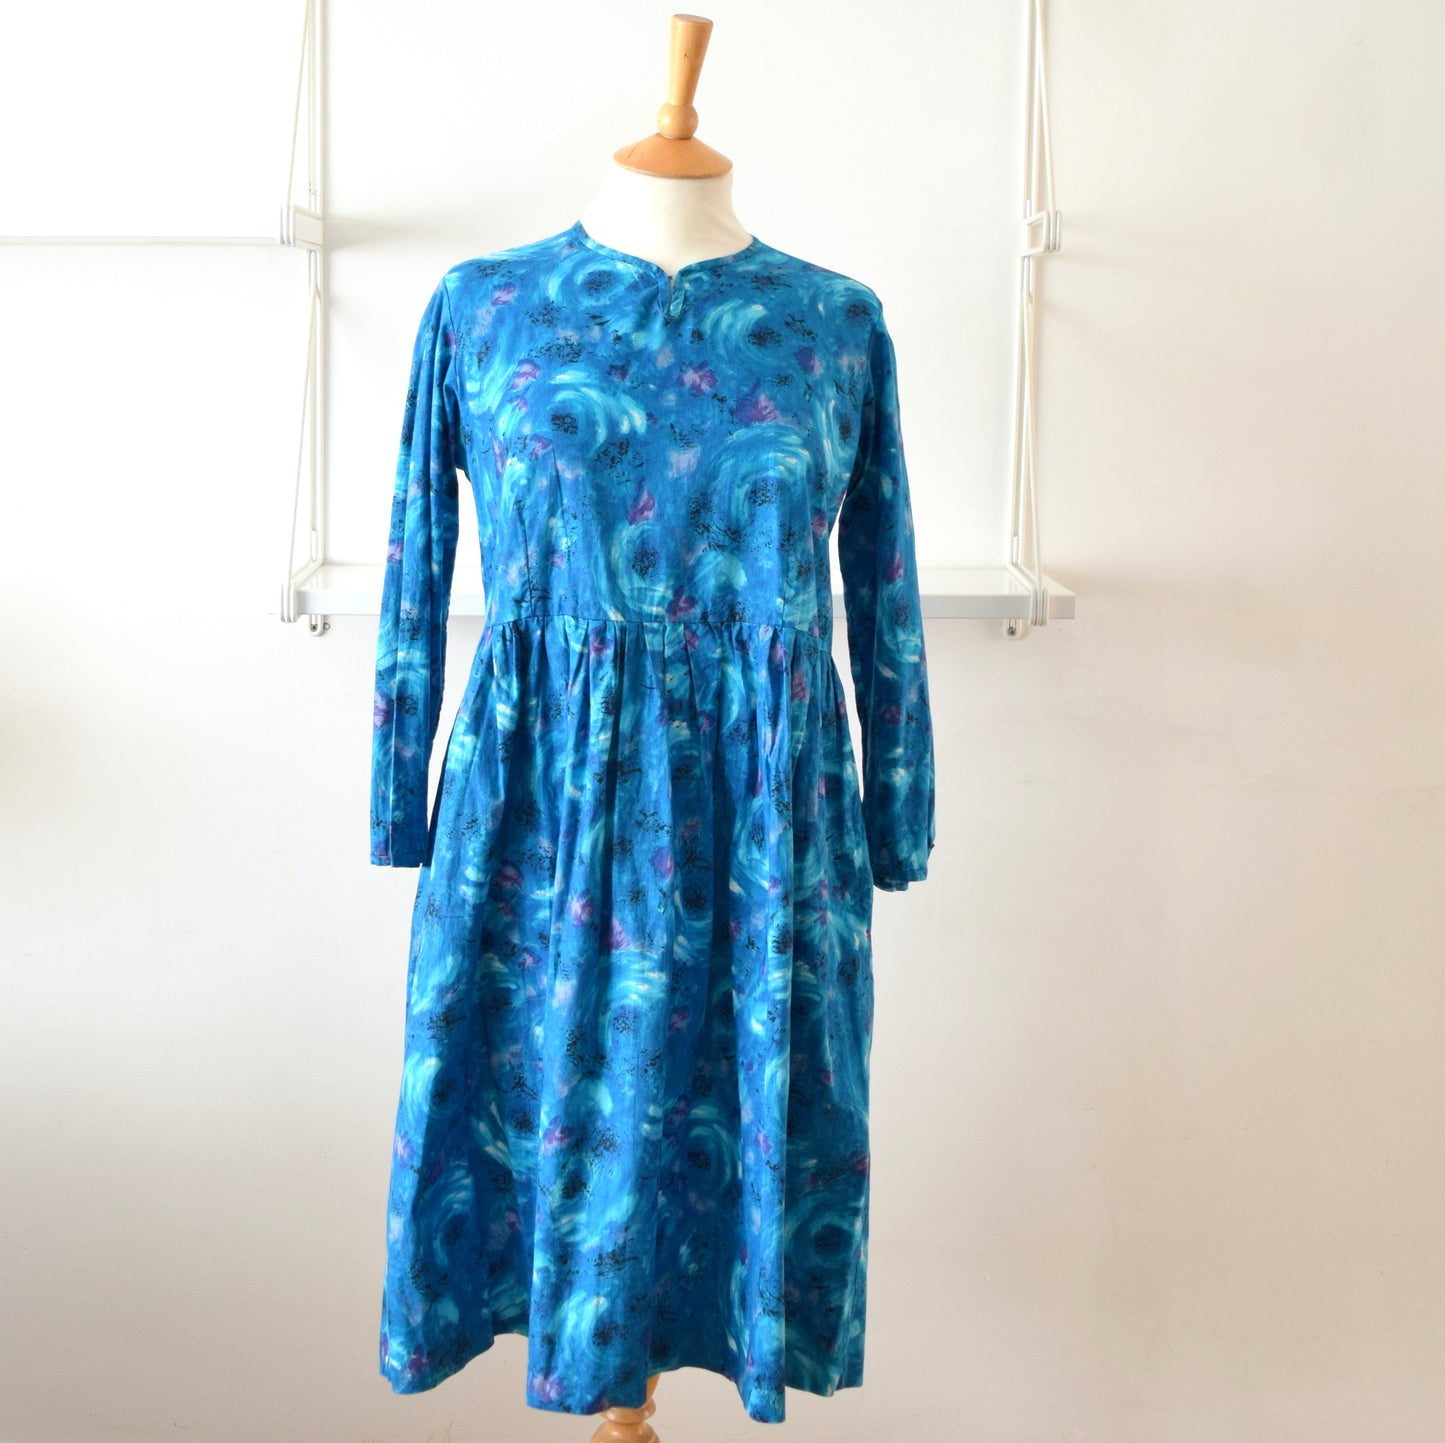 Vintage 1950s Cotton Fit & Flare Midi Dress - Blue size 12-14 ish